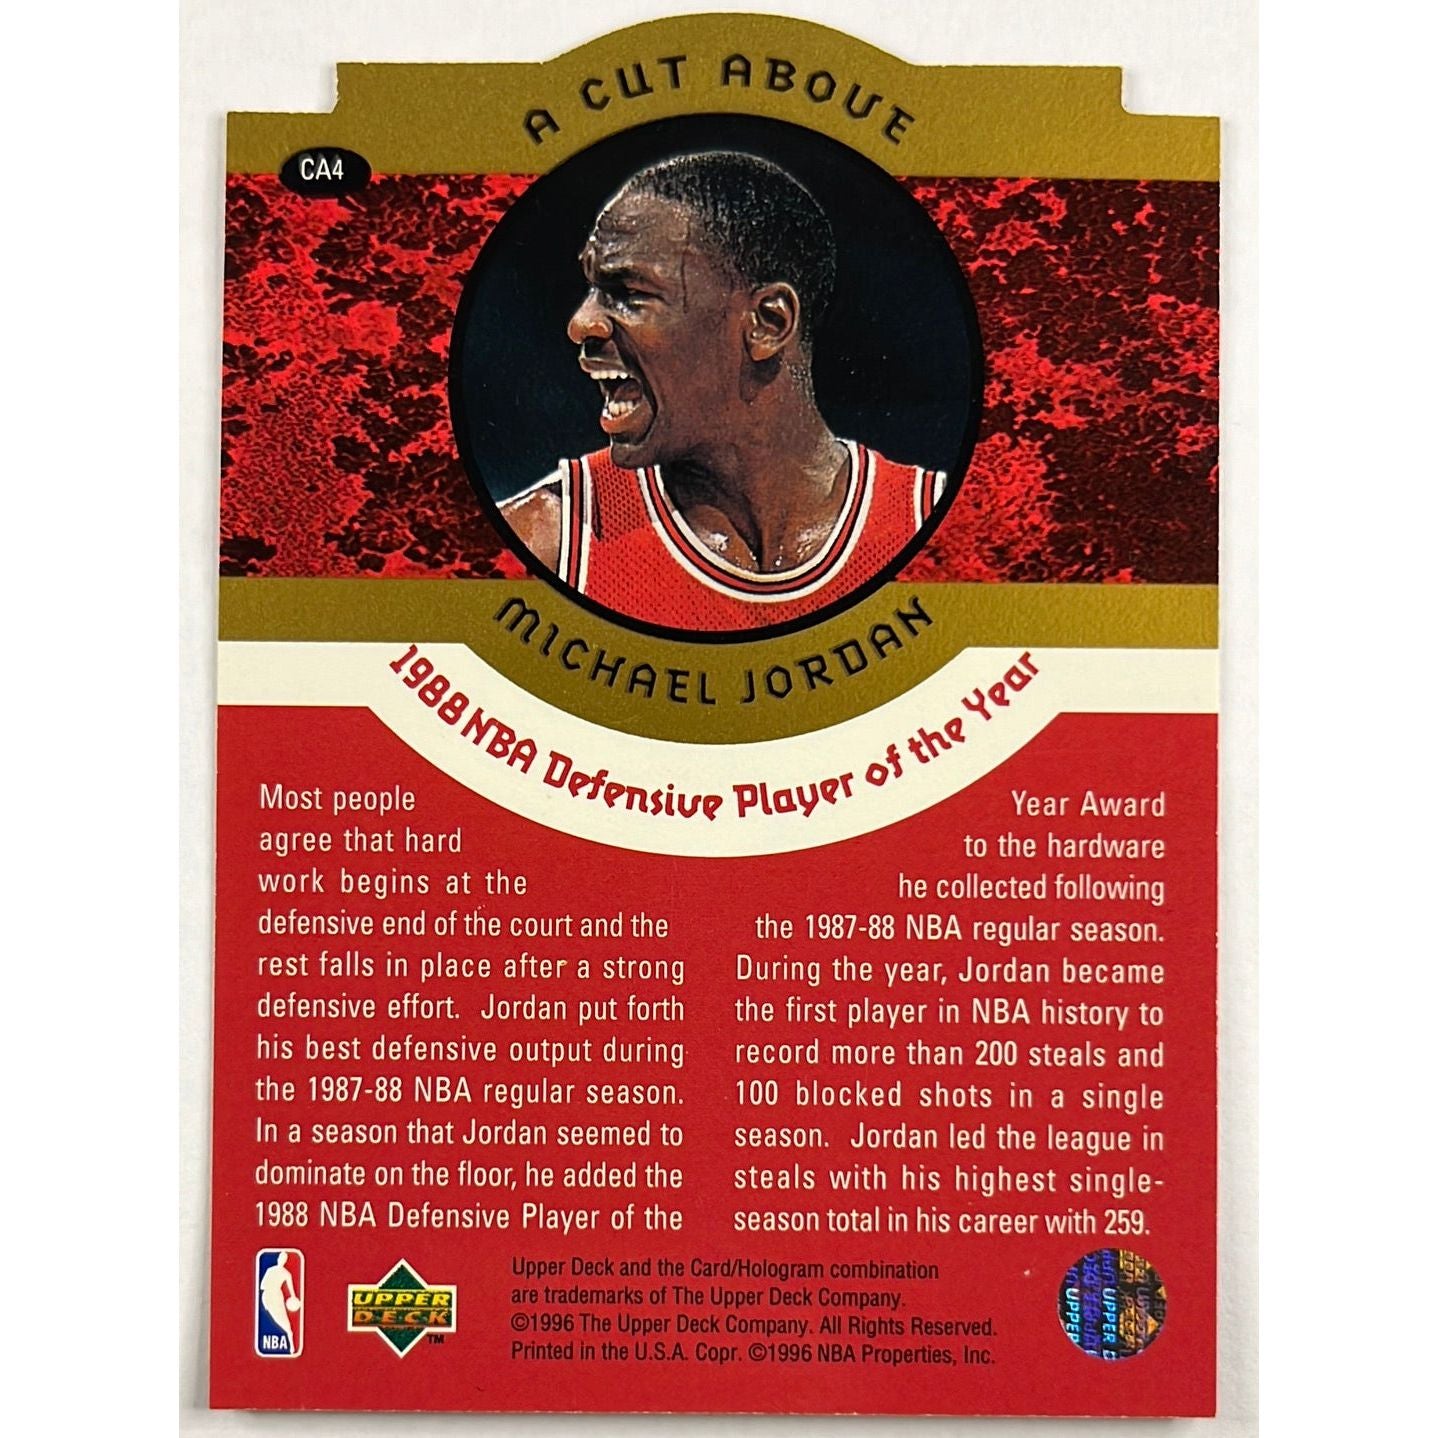 1995-96 Upper Deck Michael Jordan The Jordan Years 1988 Defensive Player of the Year A Cut Above Die Cut